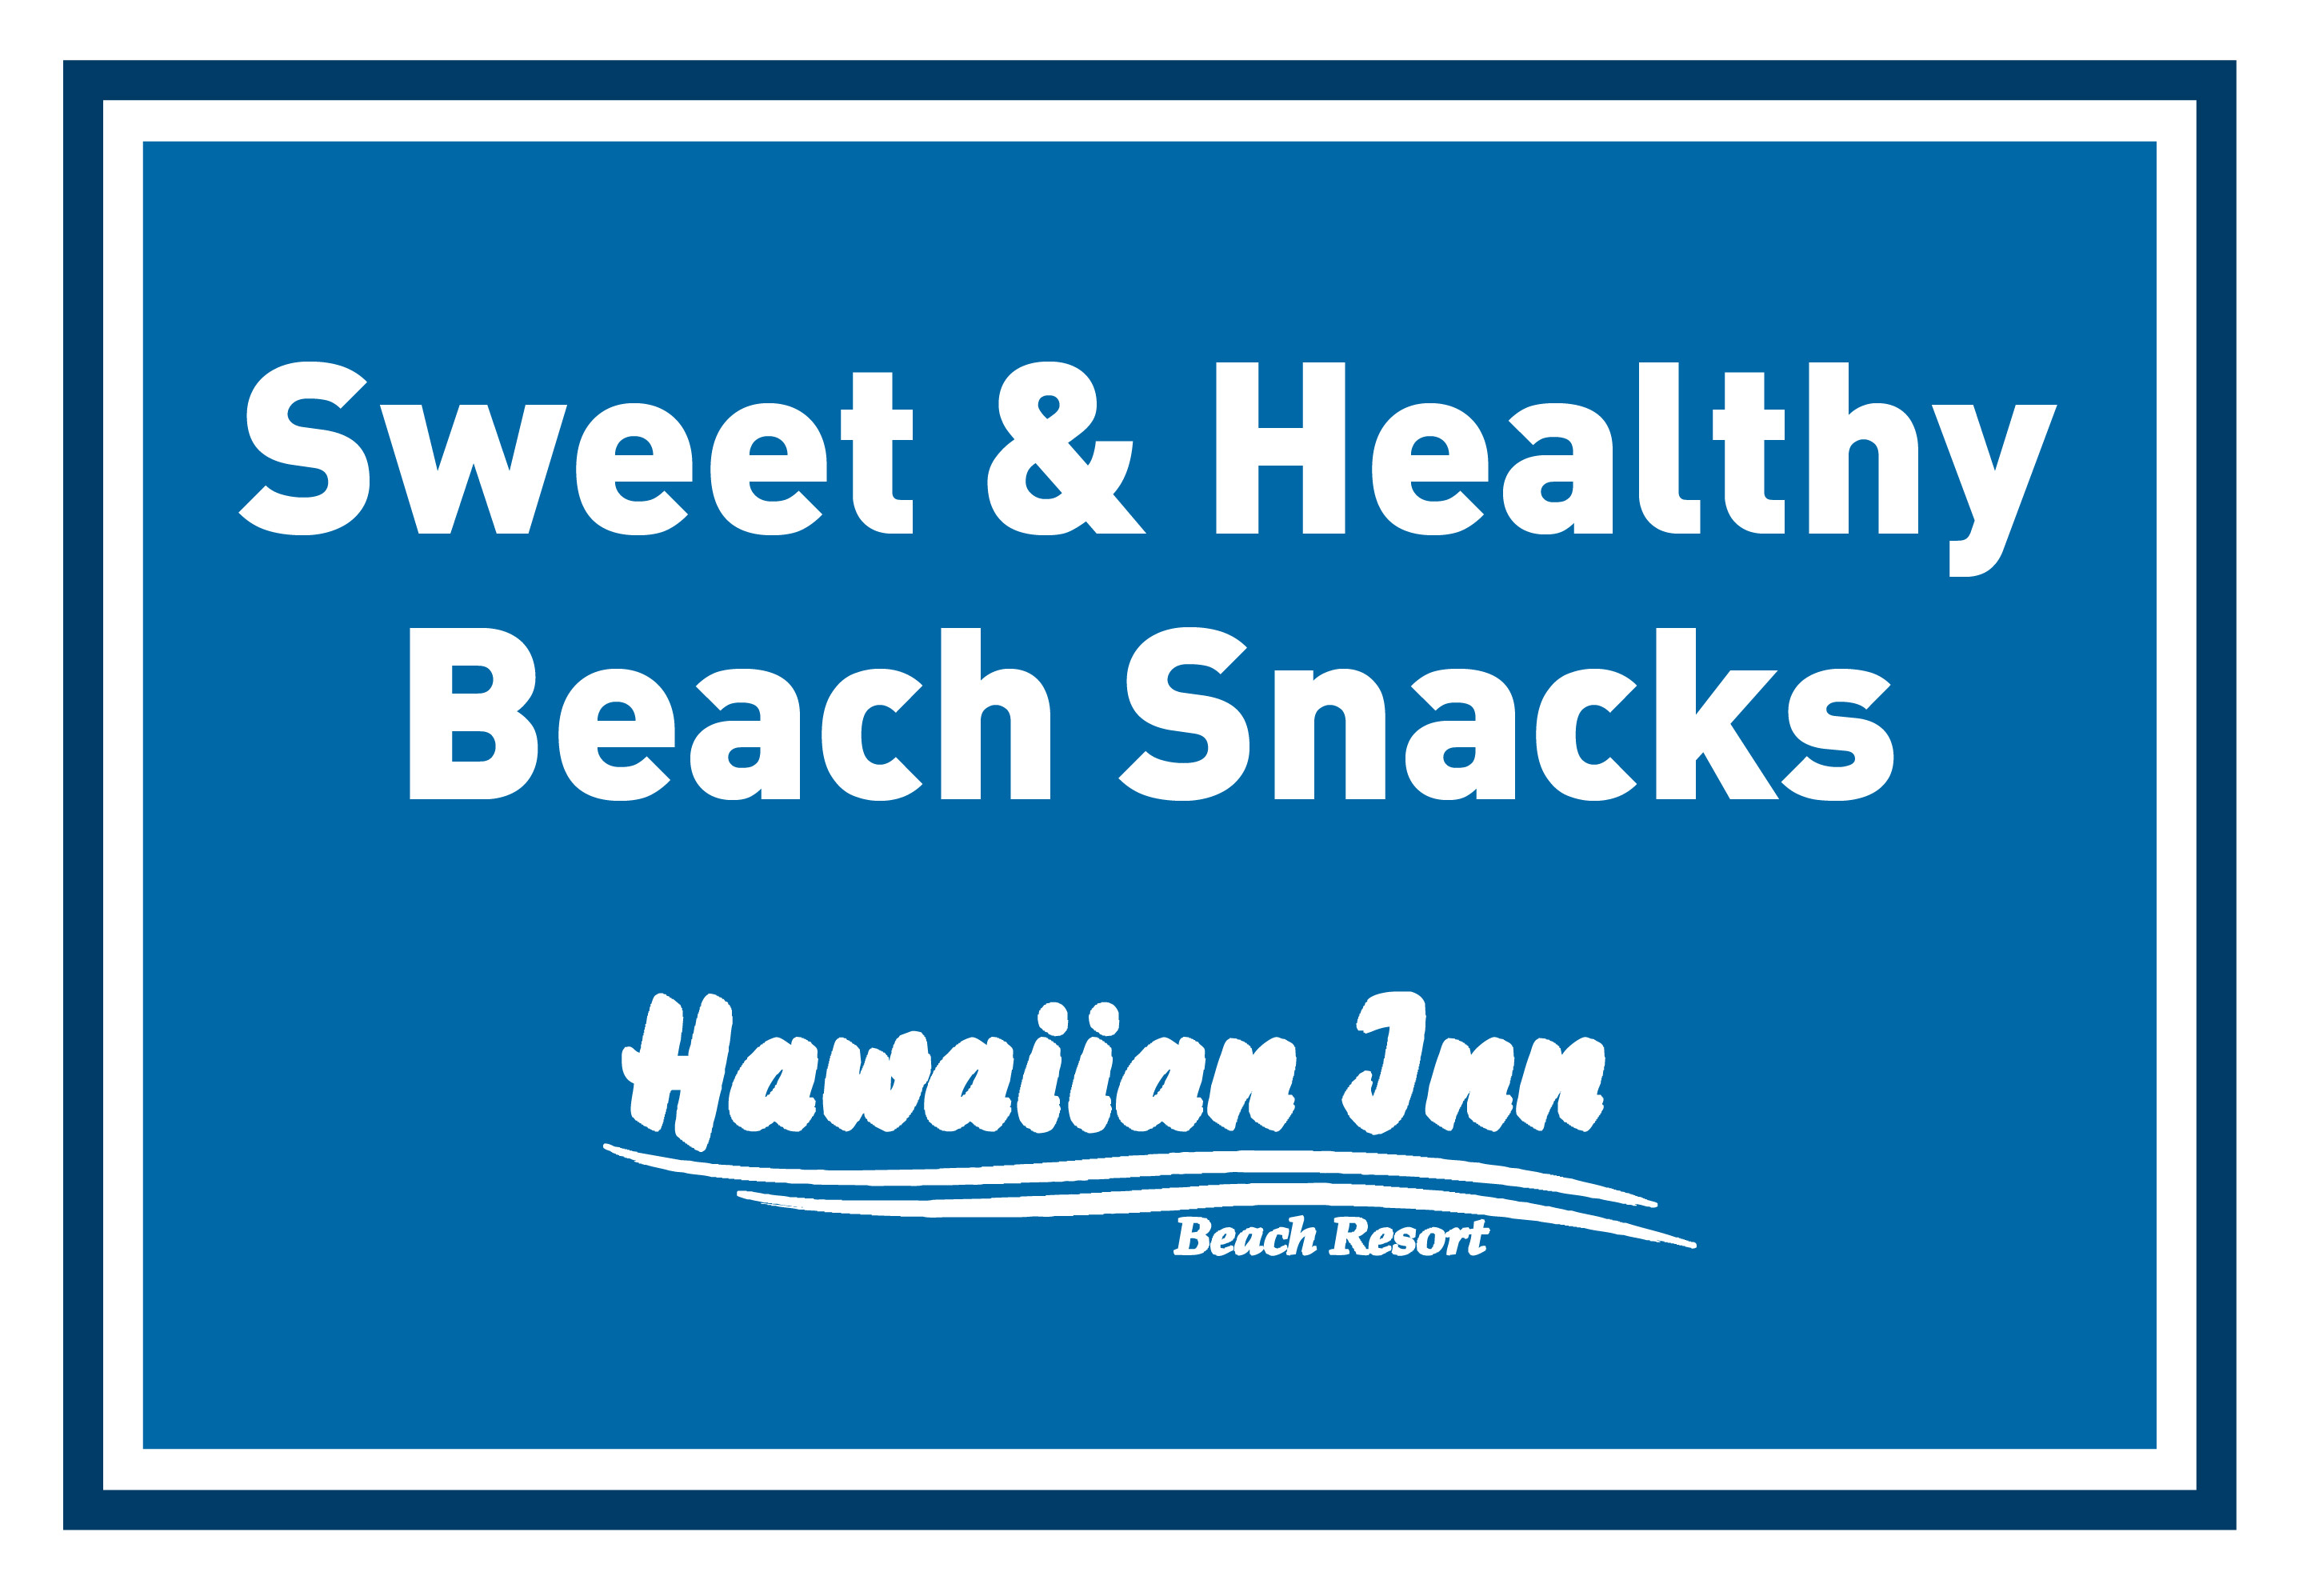 Sweet and Healthy Beach Snacks